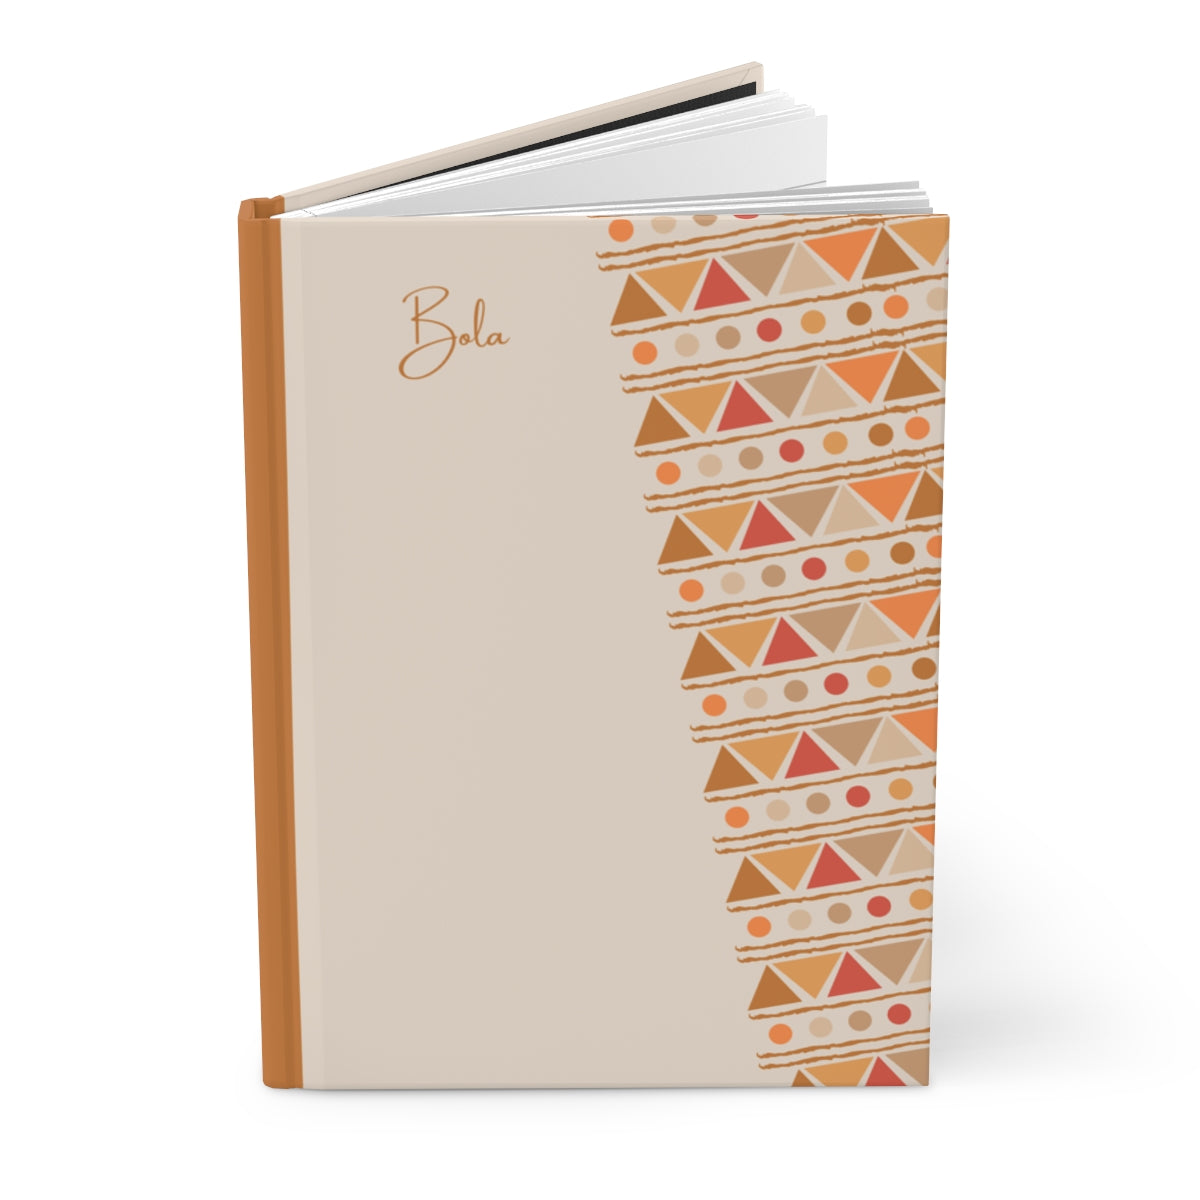 A5 Journal Notebook - Mali Sands | Hardcover Soft Touch Matte